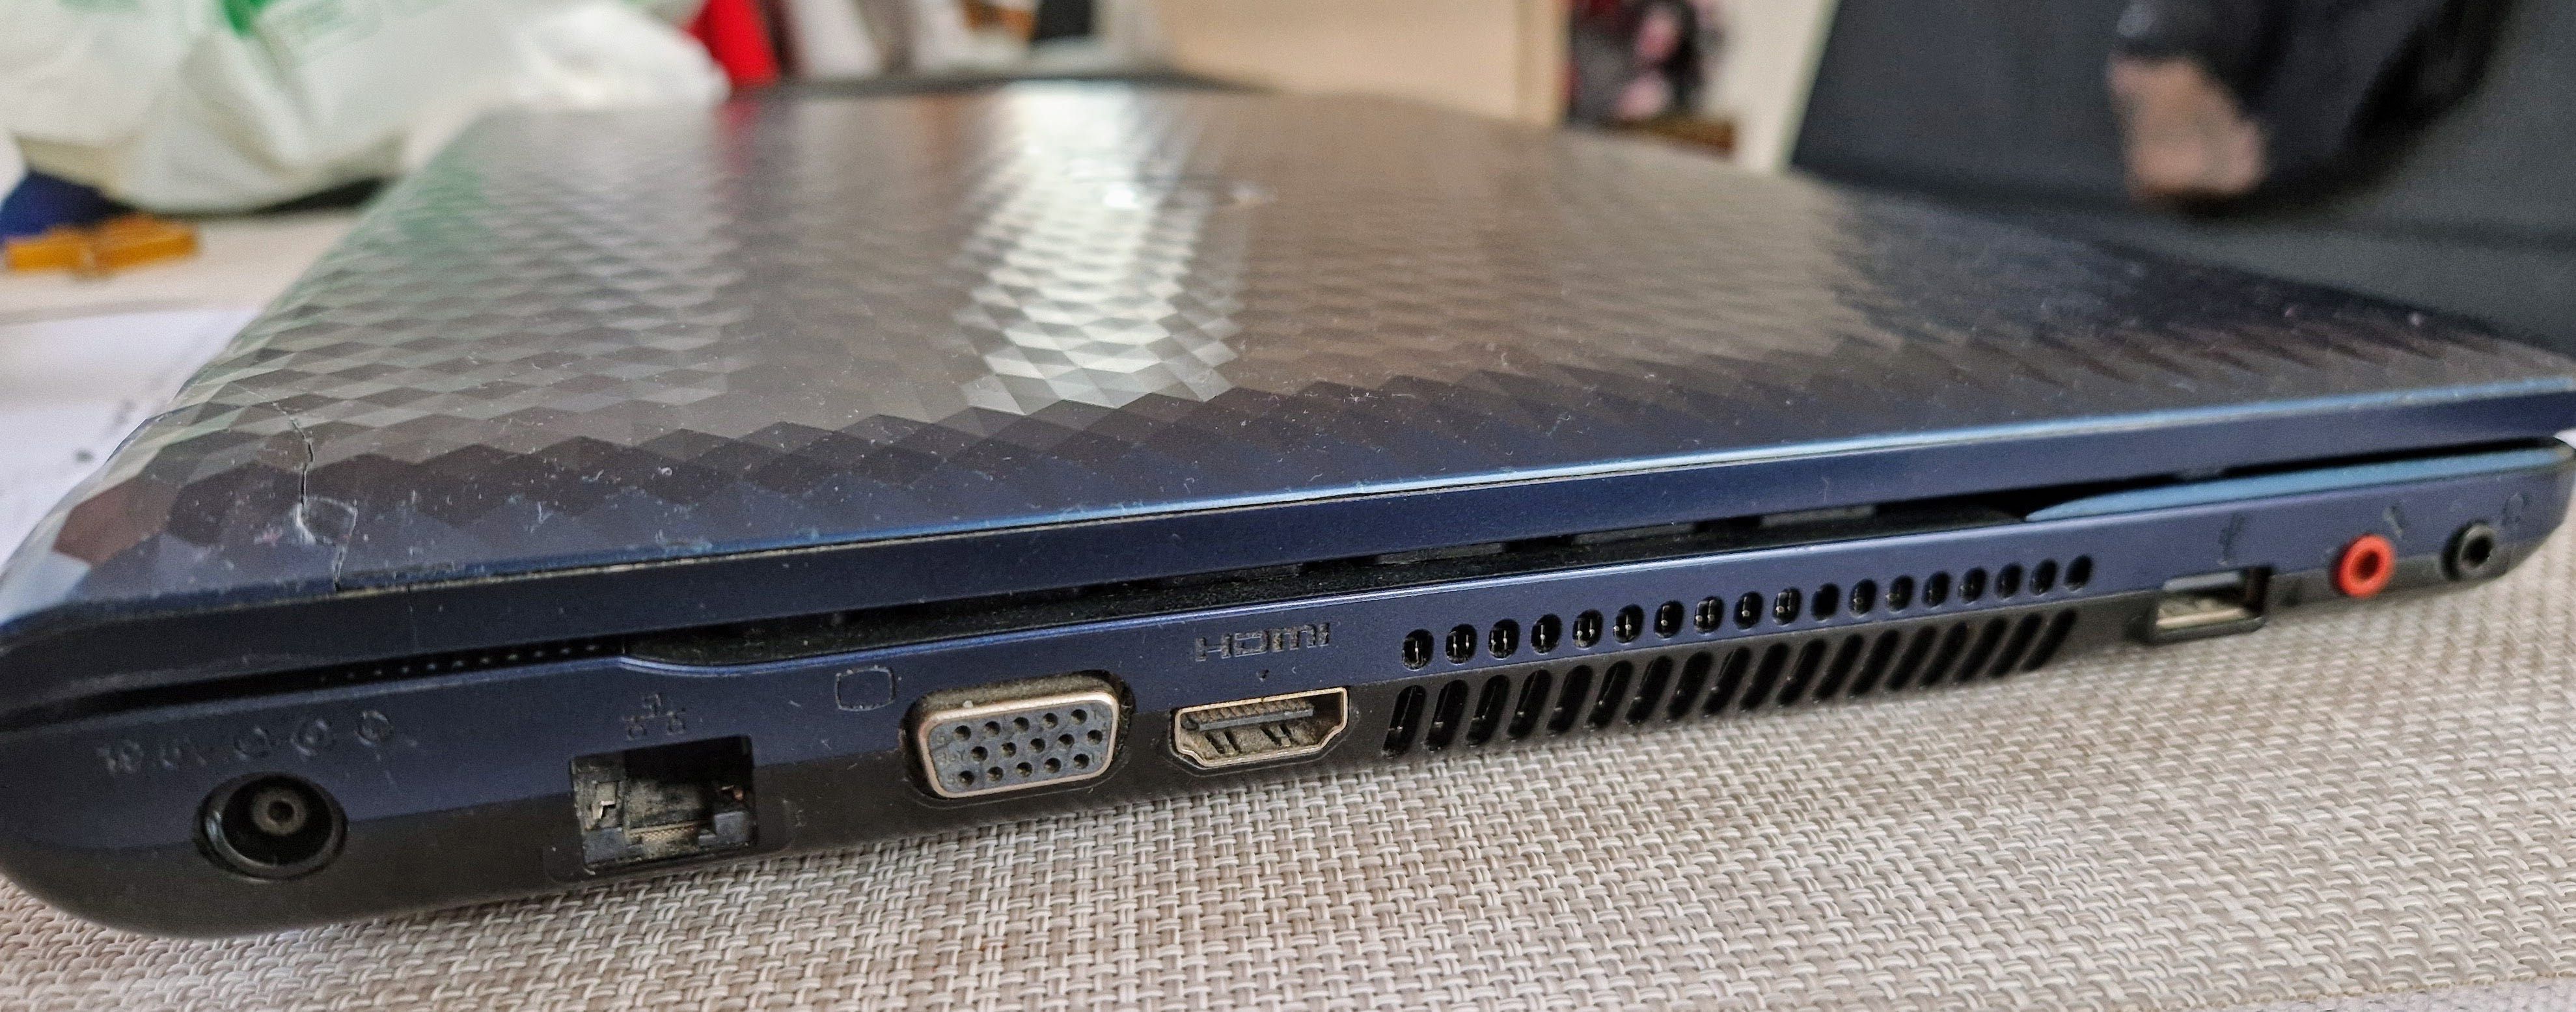 Laptop SONY VAIO PCG-71811M Intel Core i3 4 GB / 250GB SSD